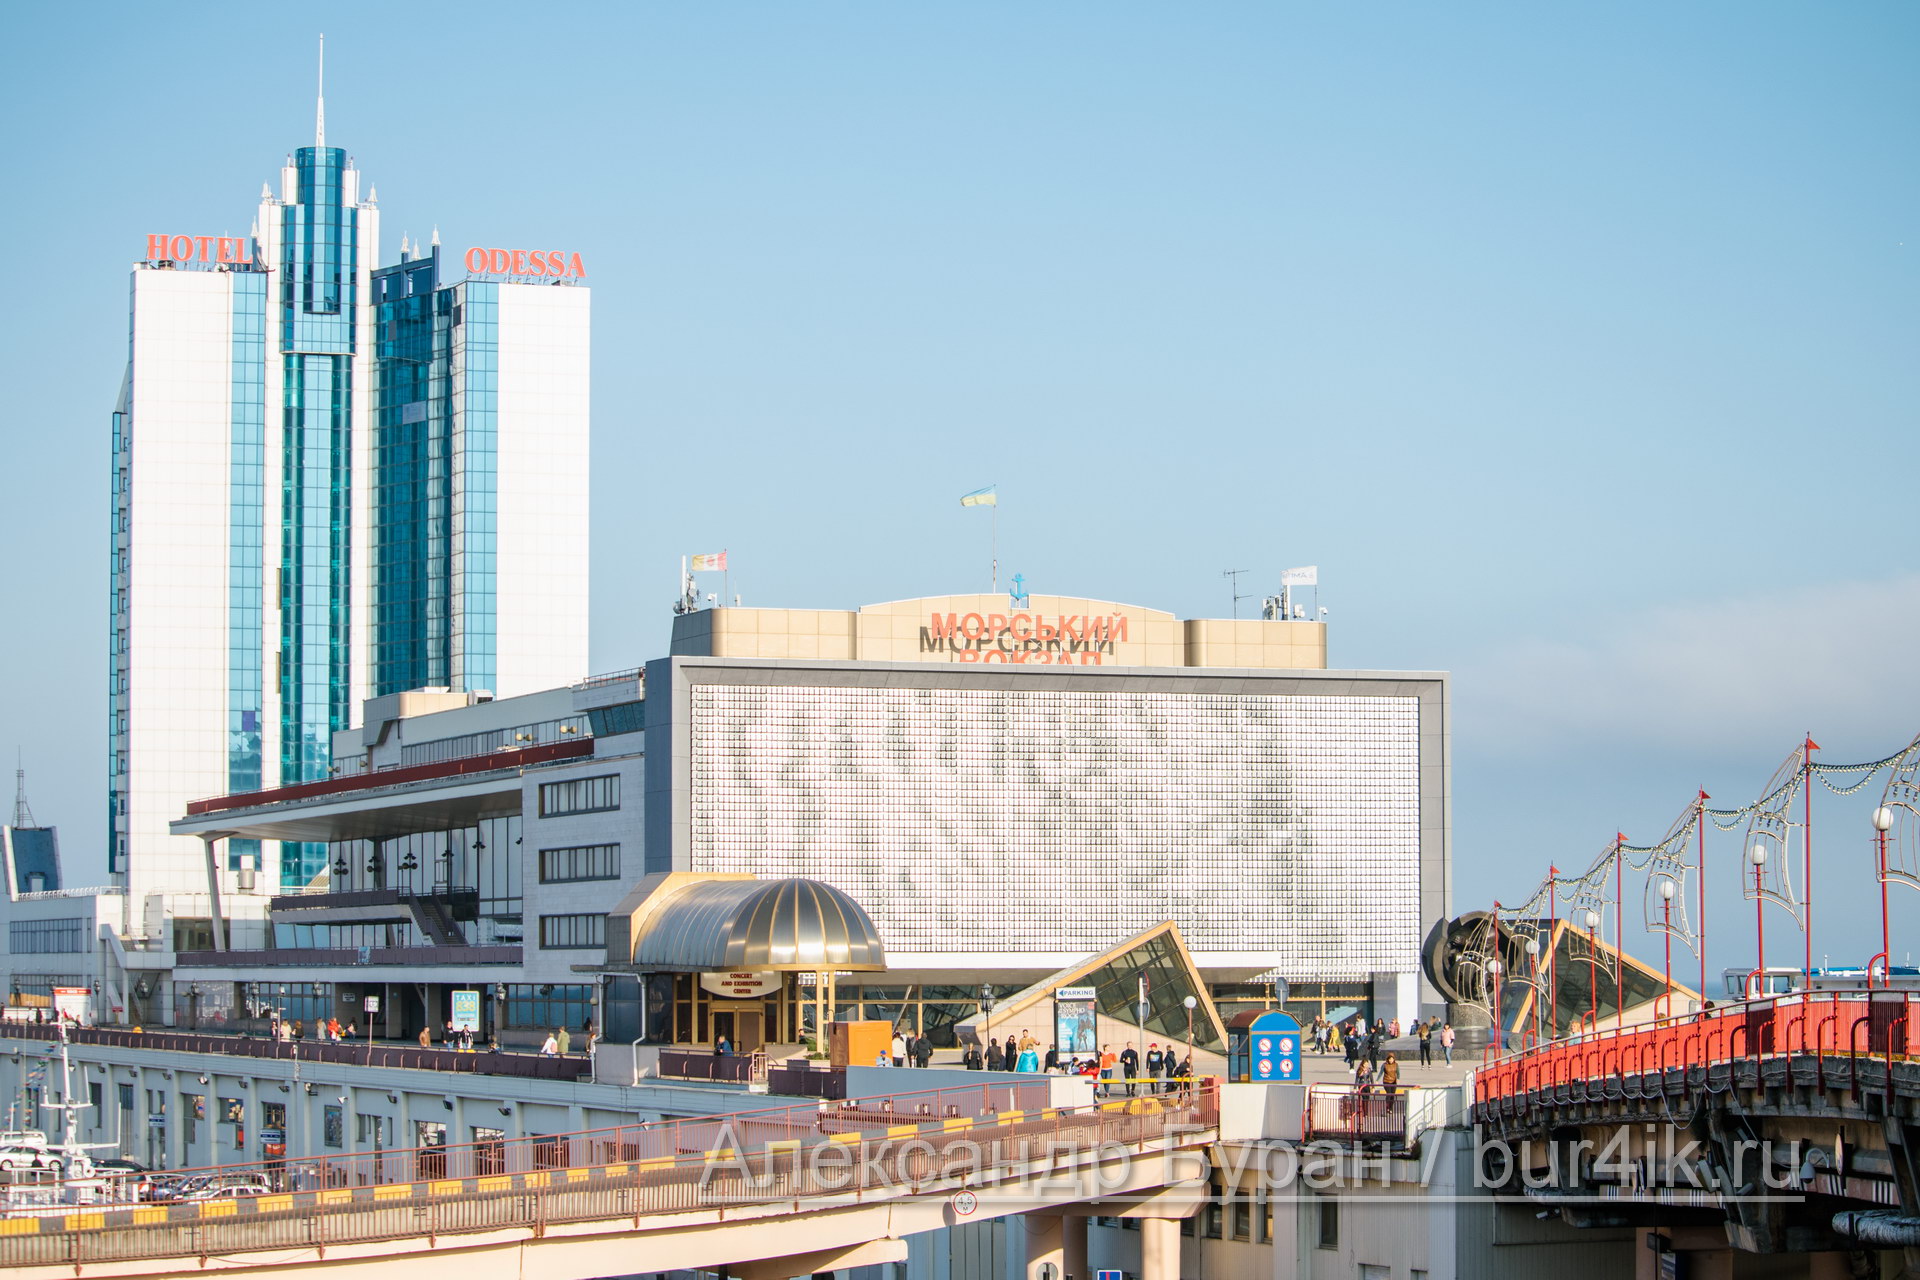 Здание администрации и гостиница в порт - Украина, Одесса, 17,10,2019-221